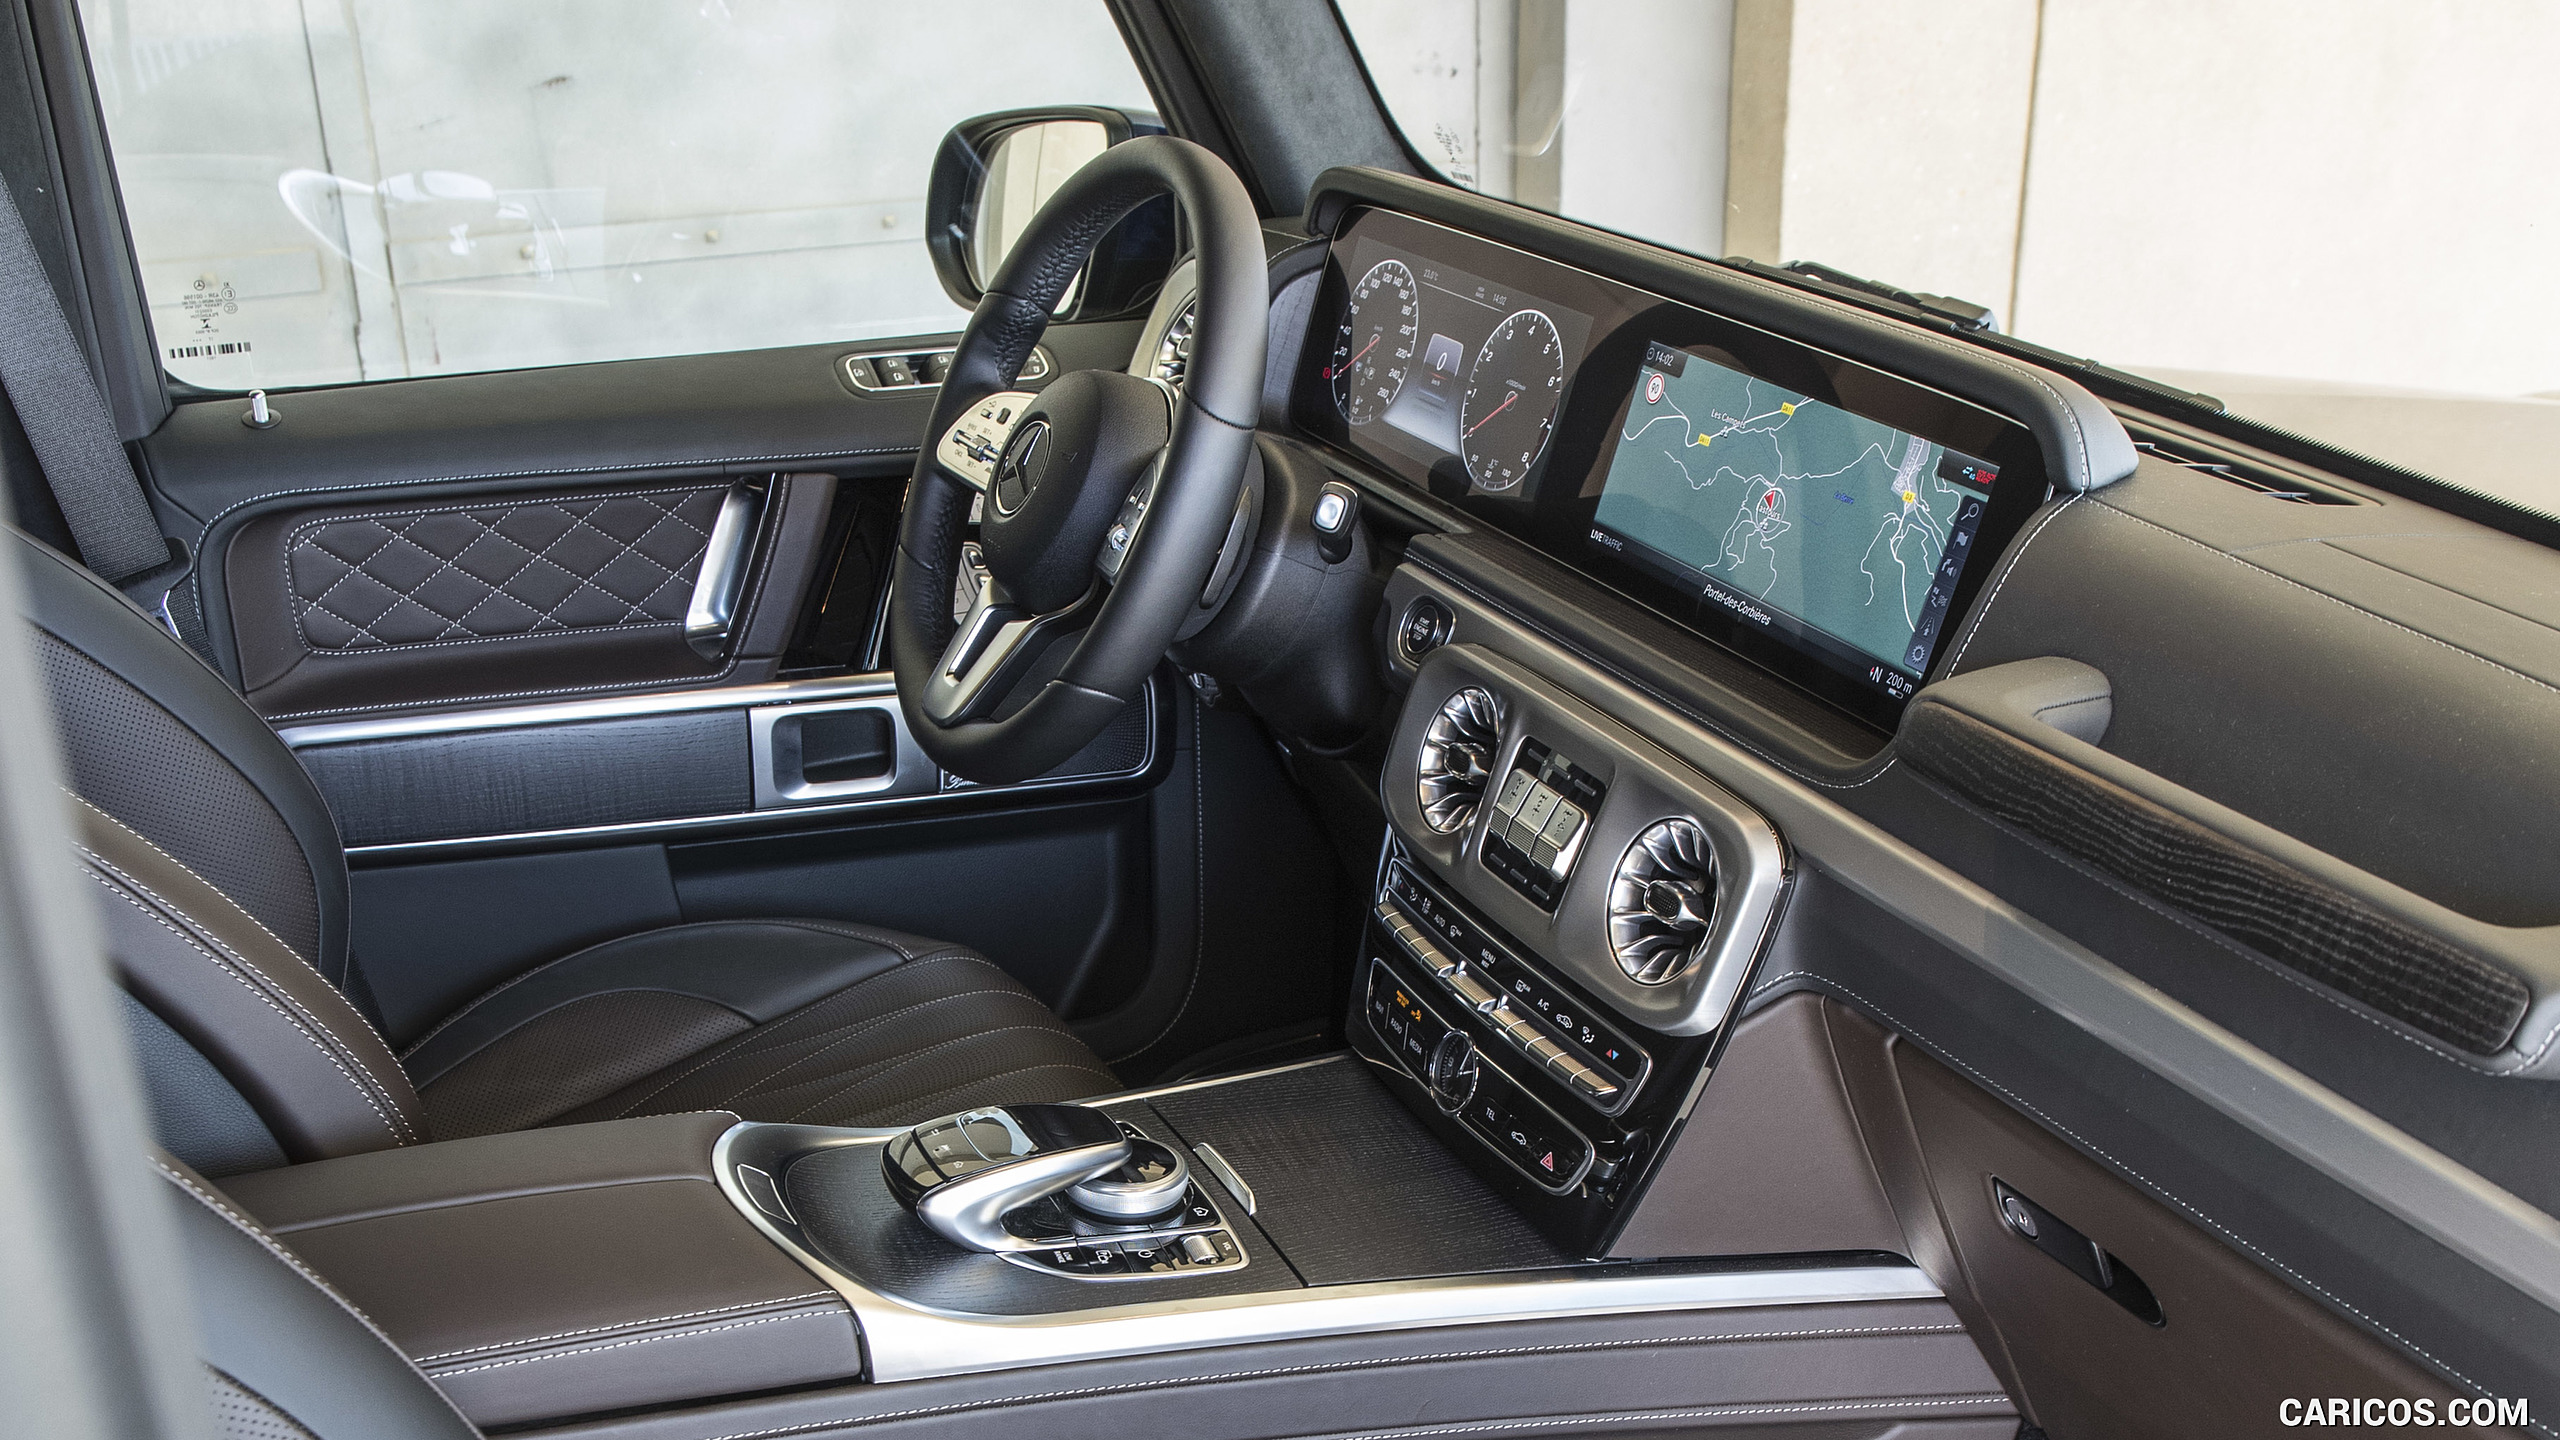 2019 Mercedes-Benz G-Class G550 - Interior, Front Seats, #243 of 397